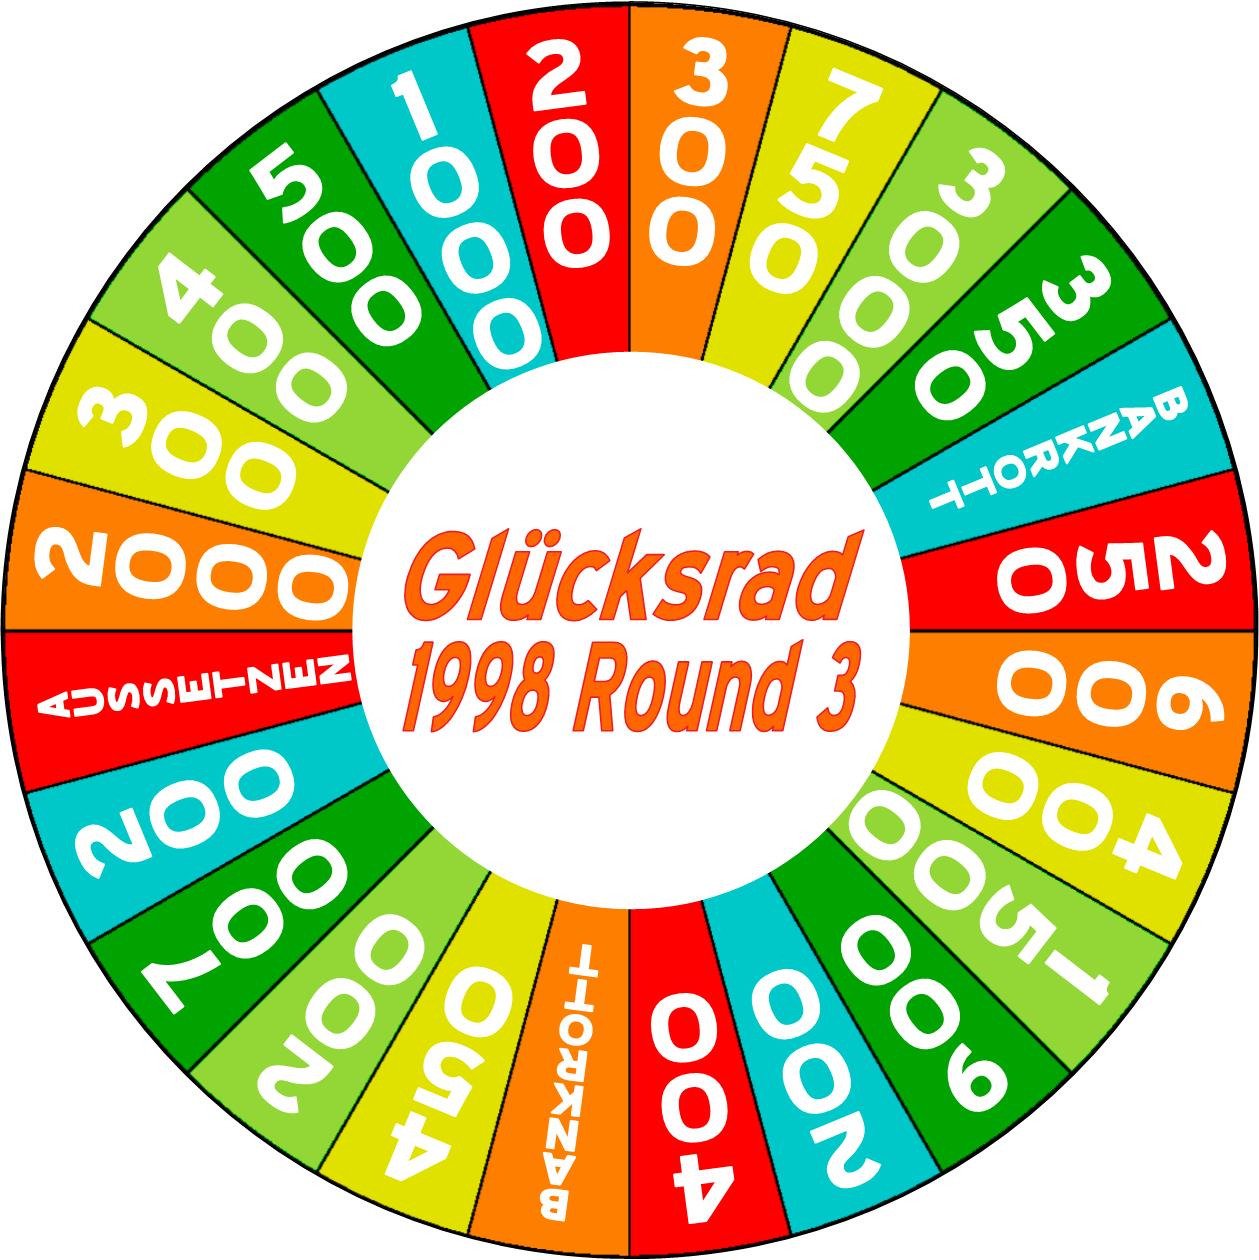 Glücksrad 1998 Round 3 by germanname